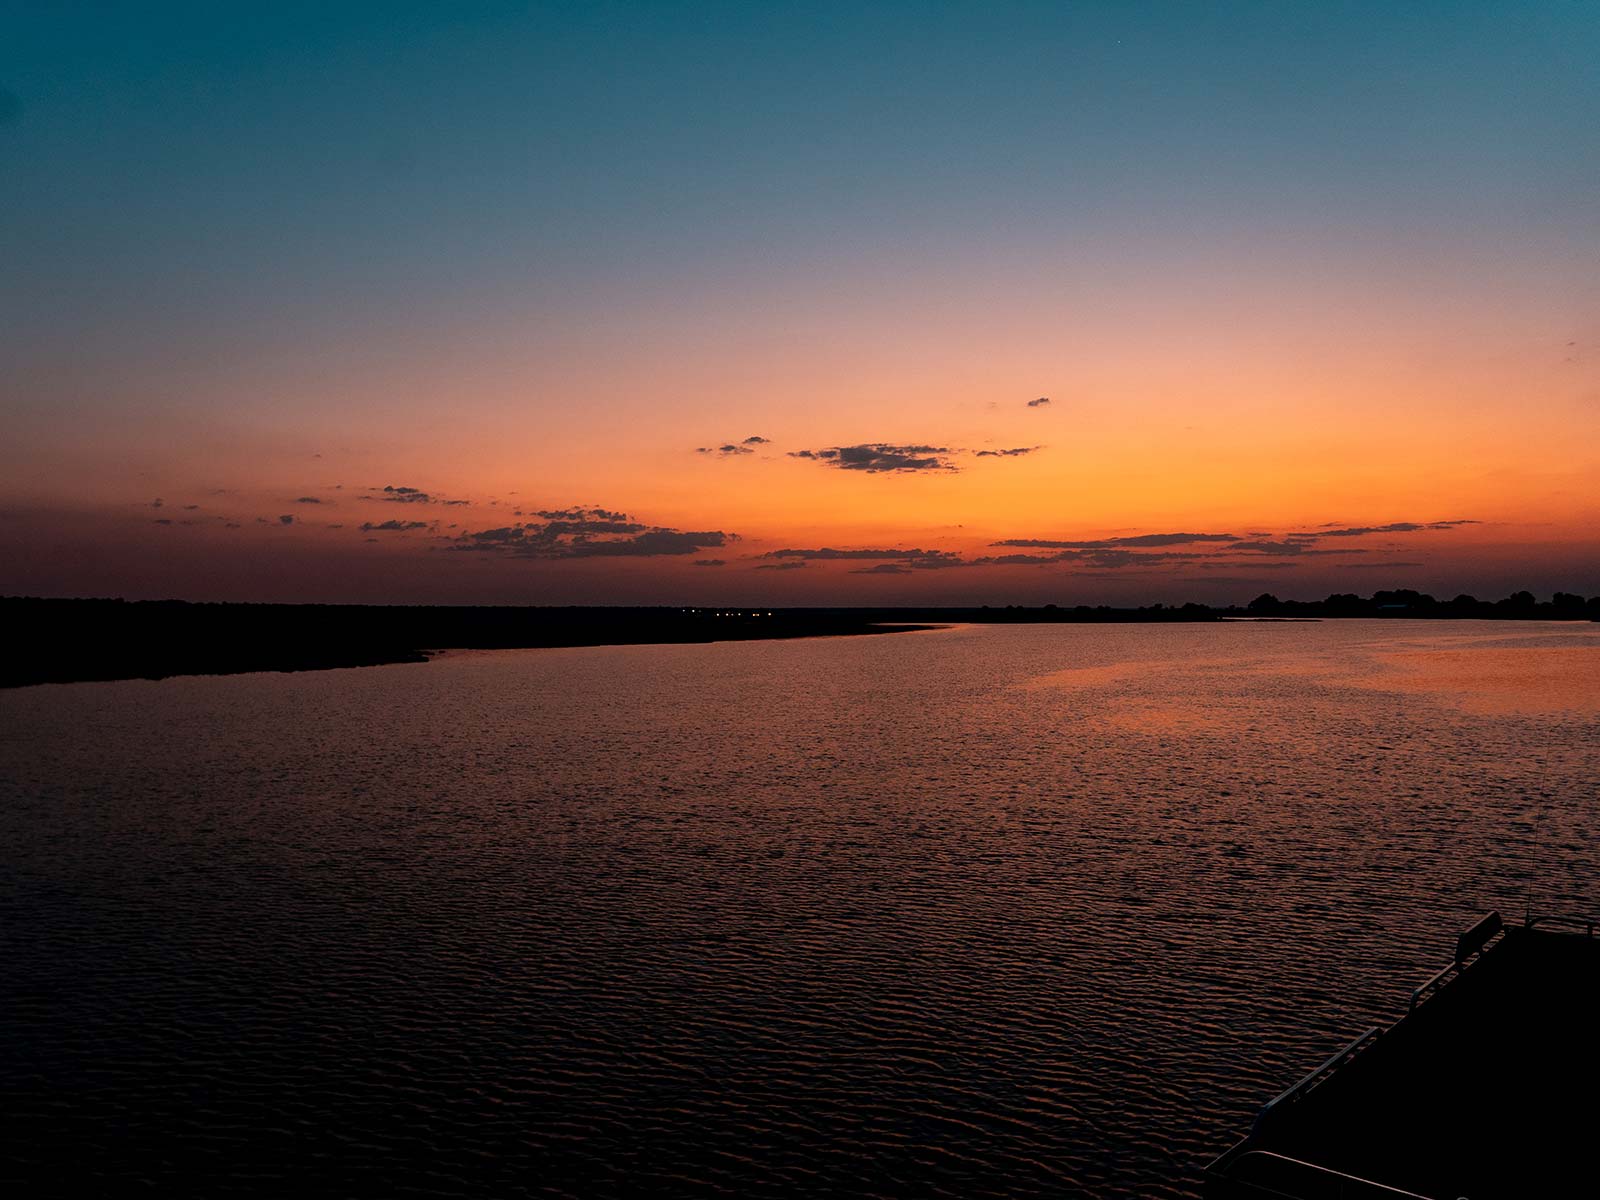 Sunset at Zambezi River in Botswana, Africa. The hunt for 100 trillion dollars